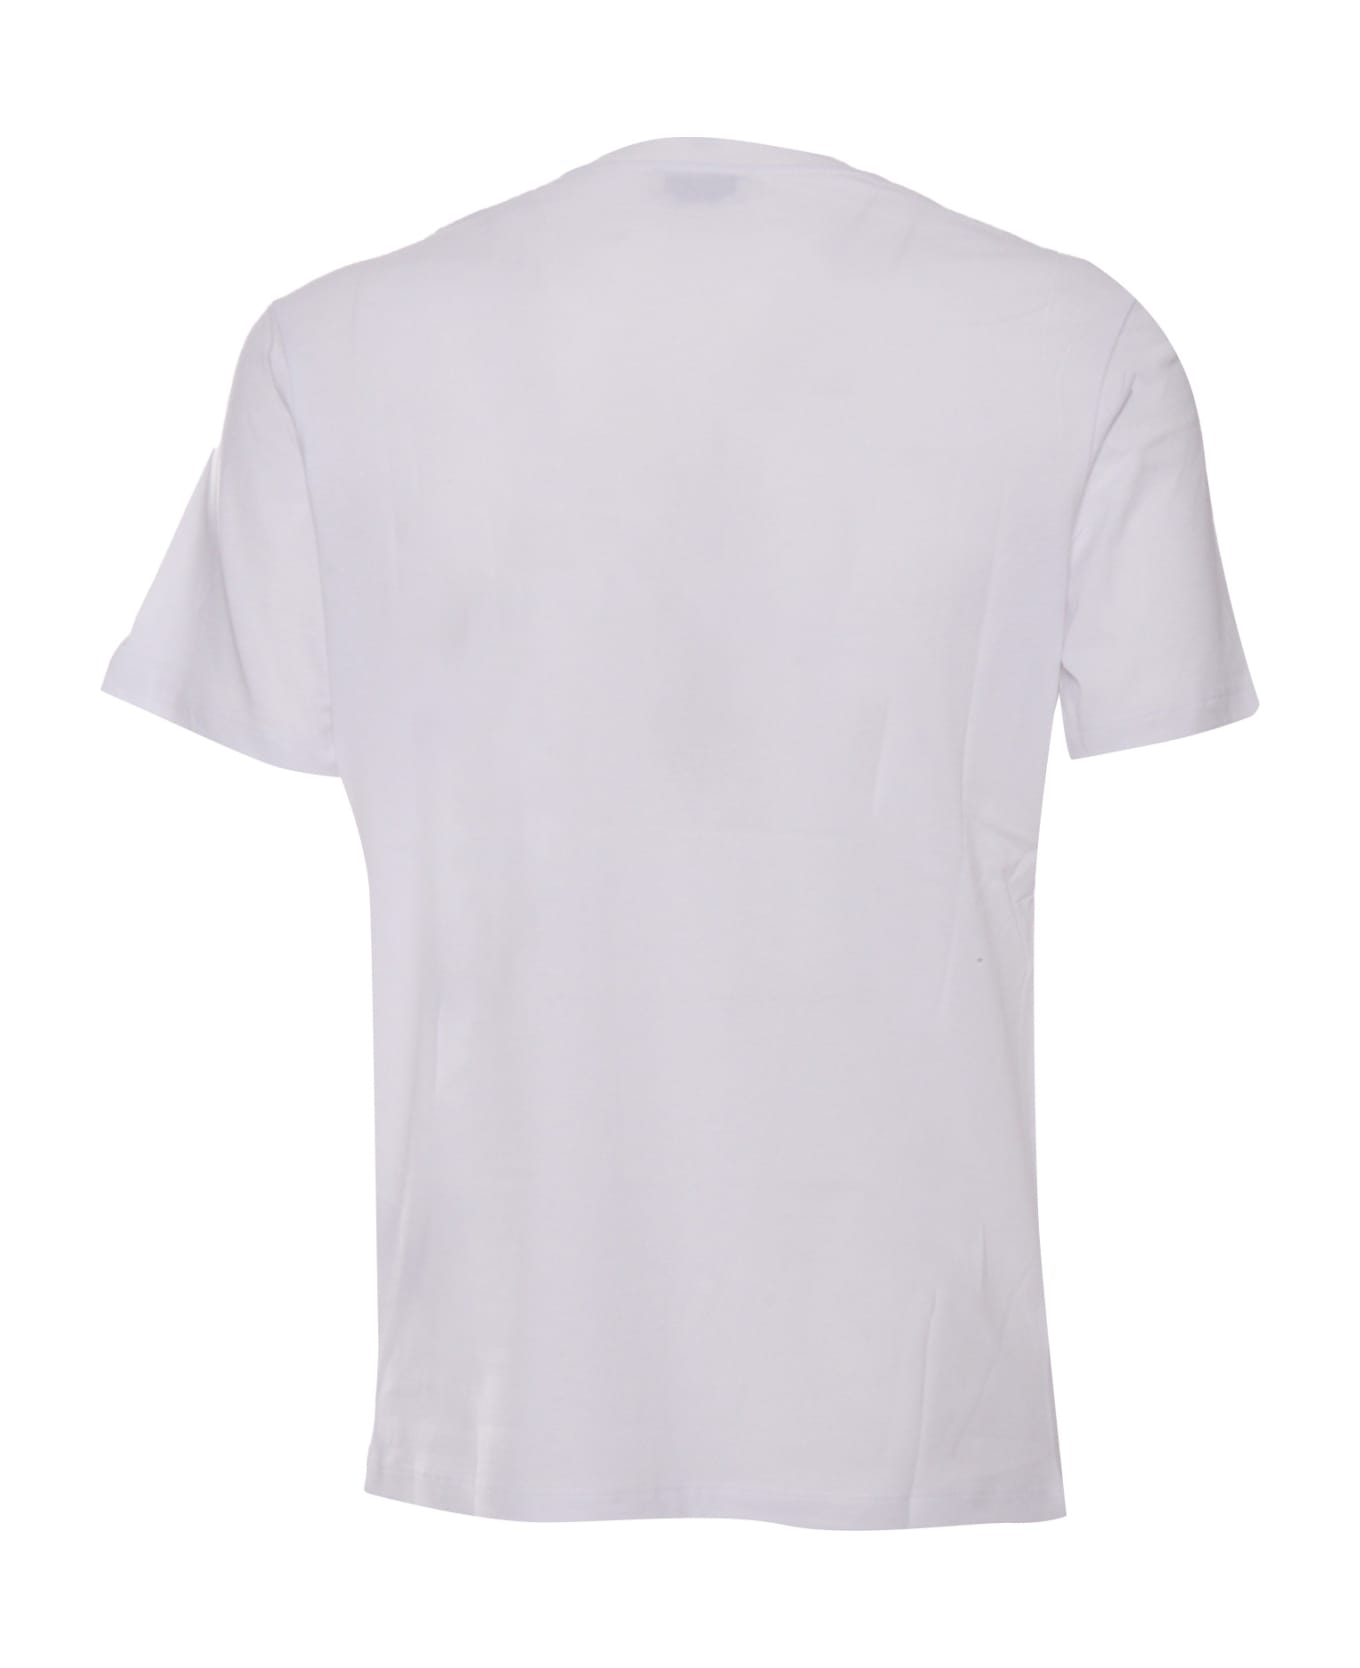 Ballantyne White T-shirt - WHITE シャツ